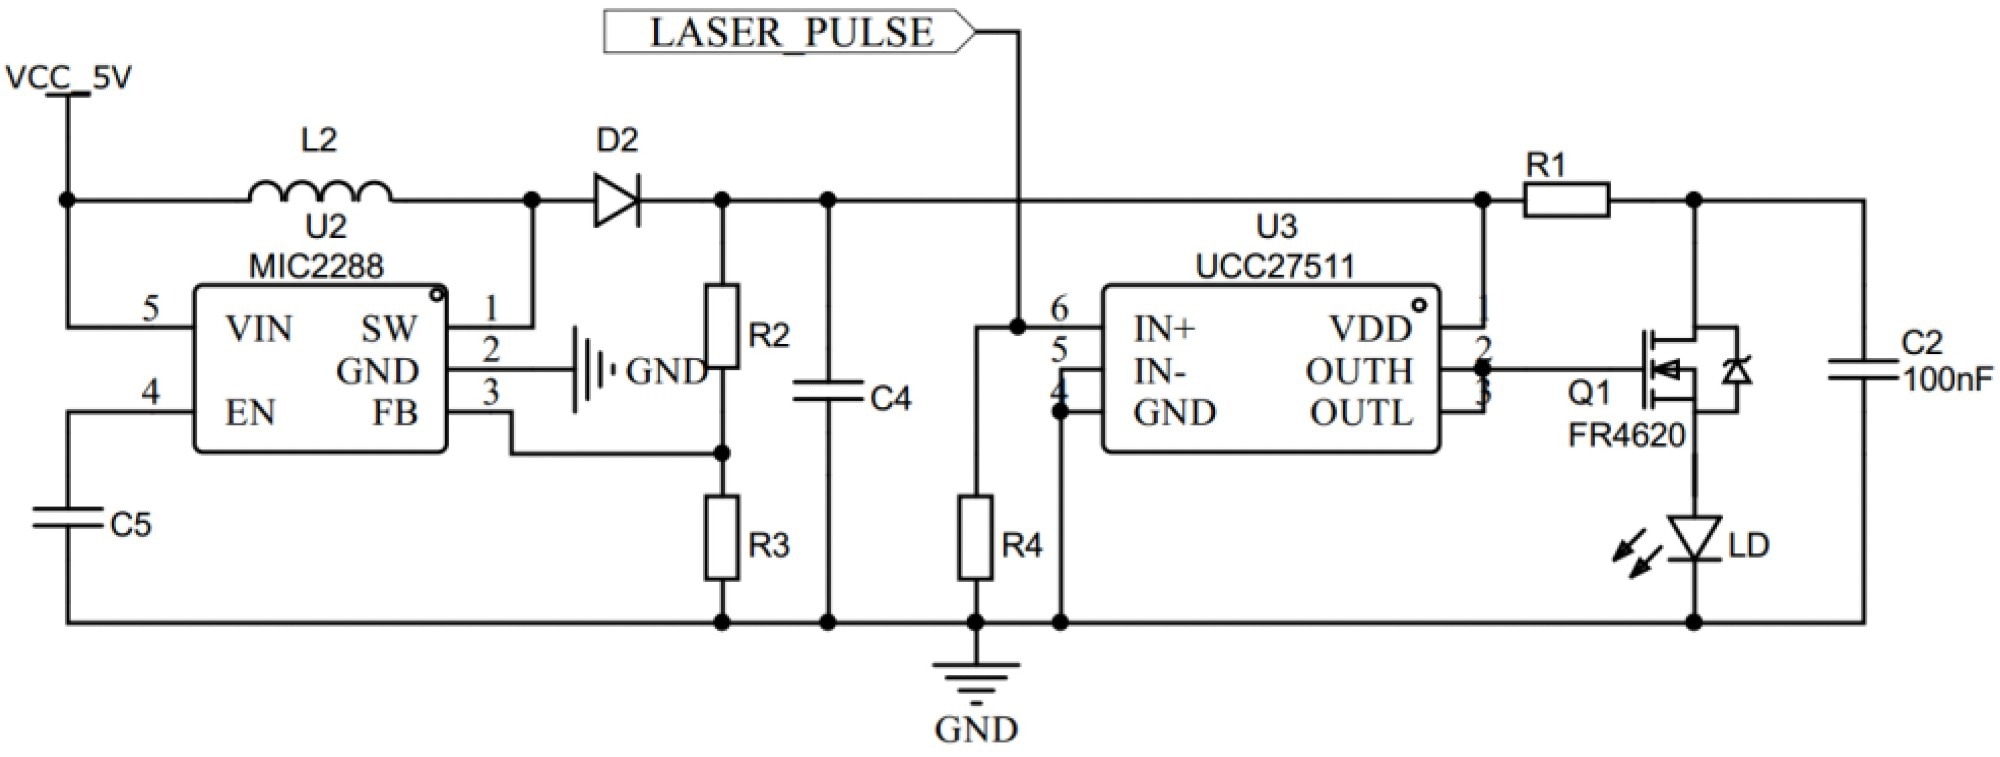 Laser drive circuit.